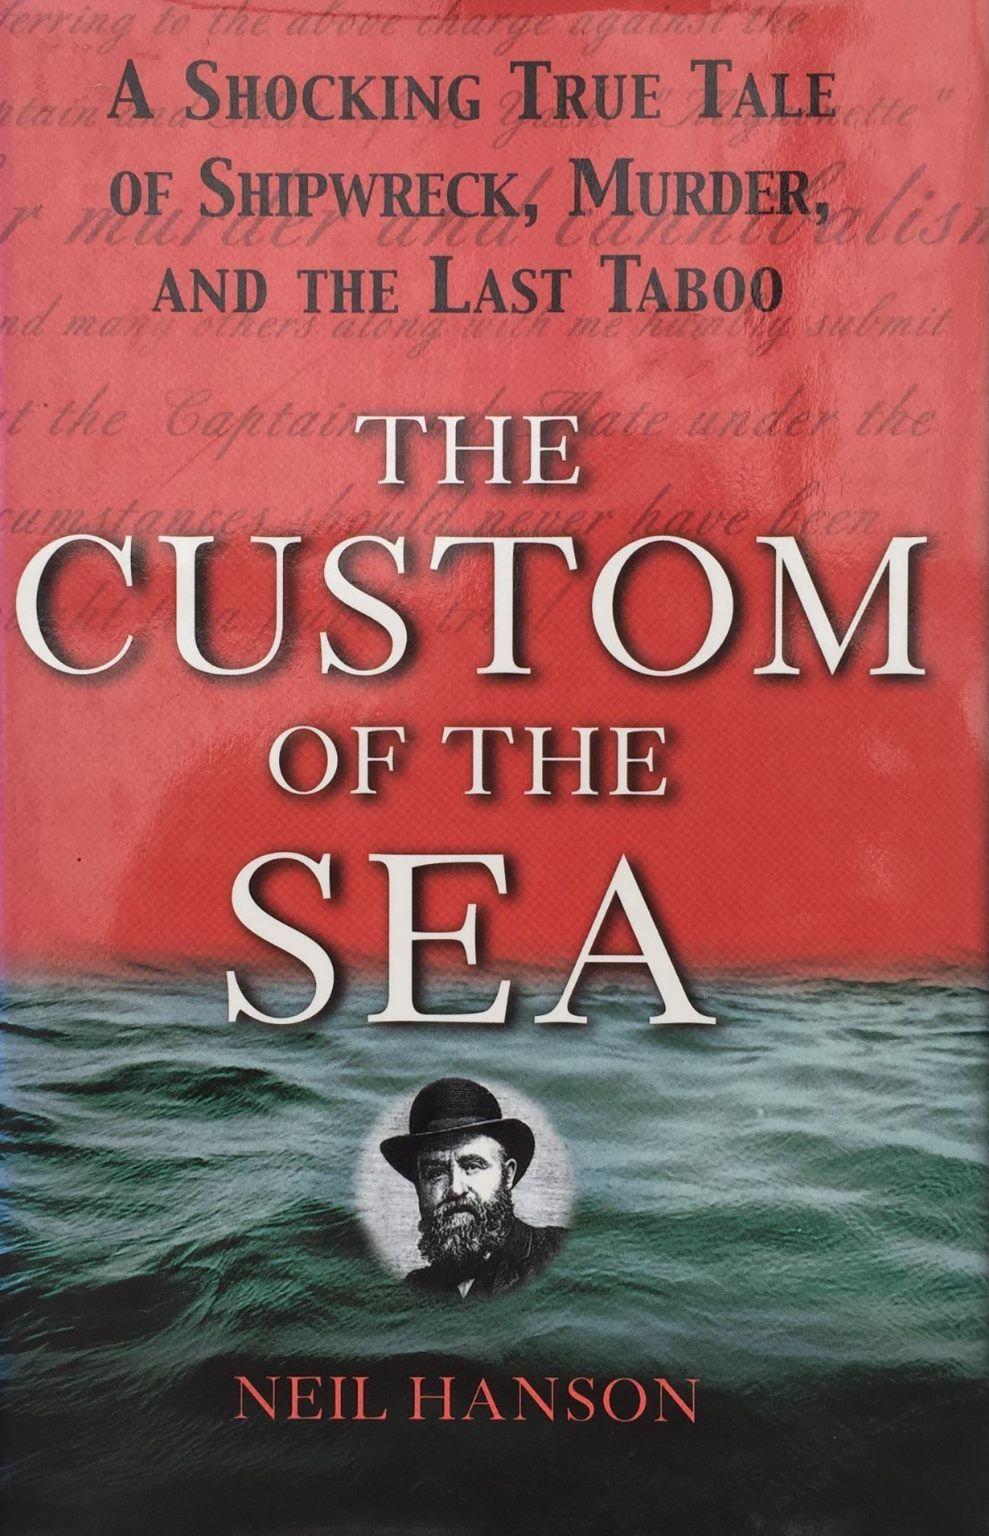 THE CUSTOM OF THE SEA